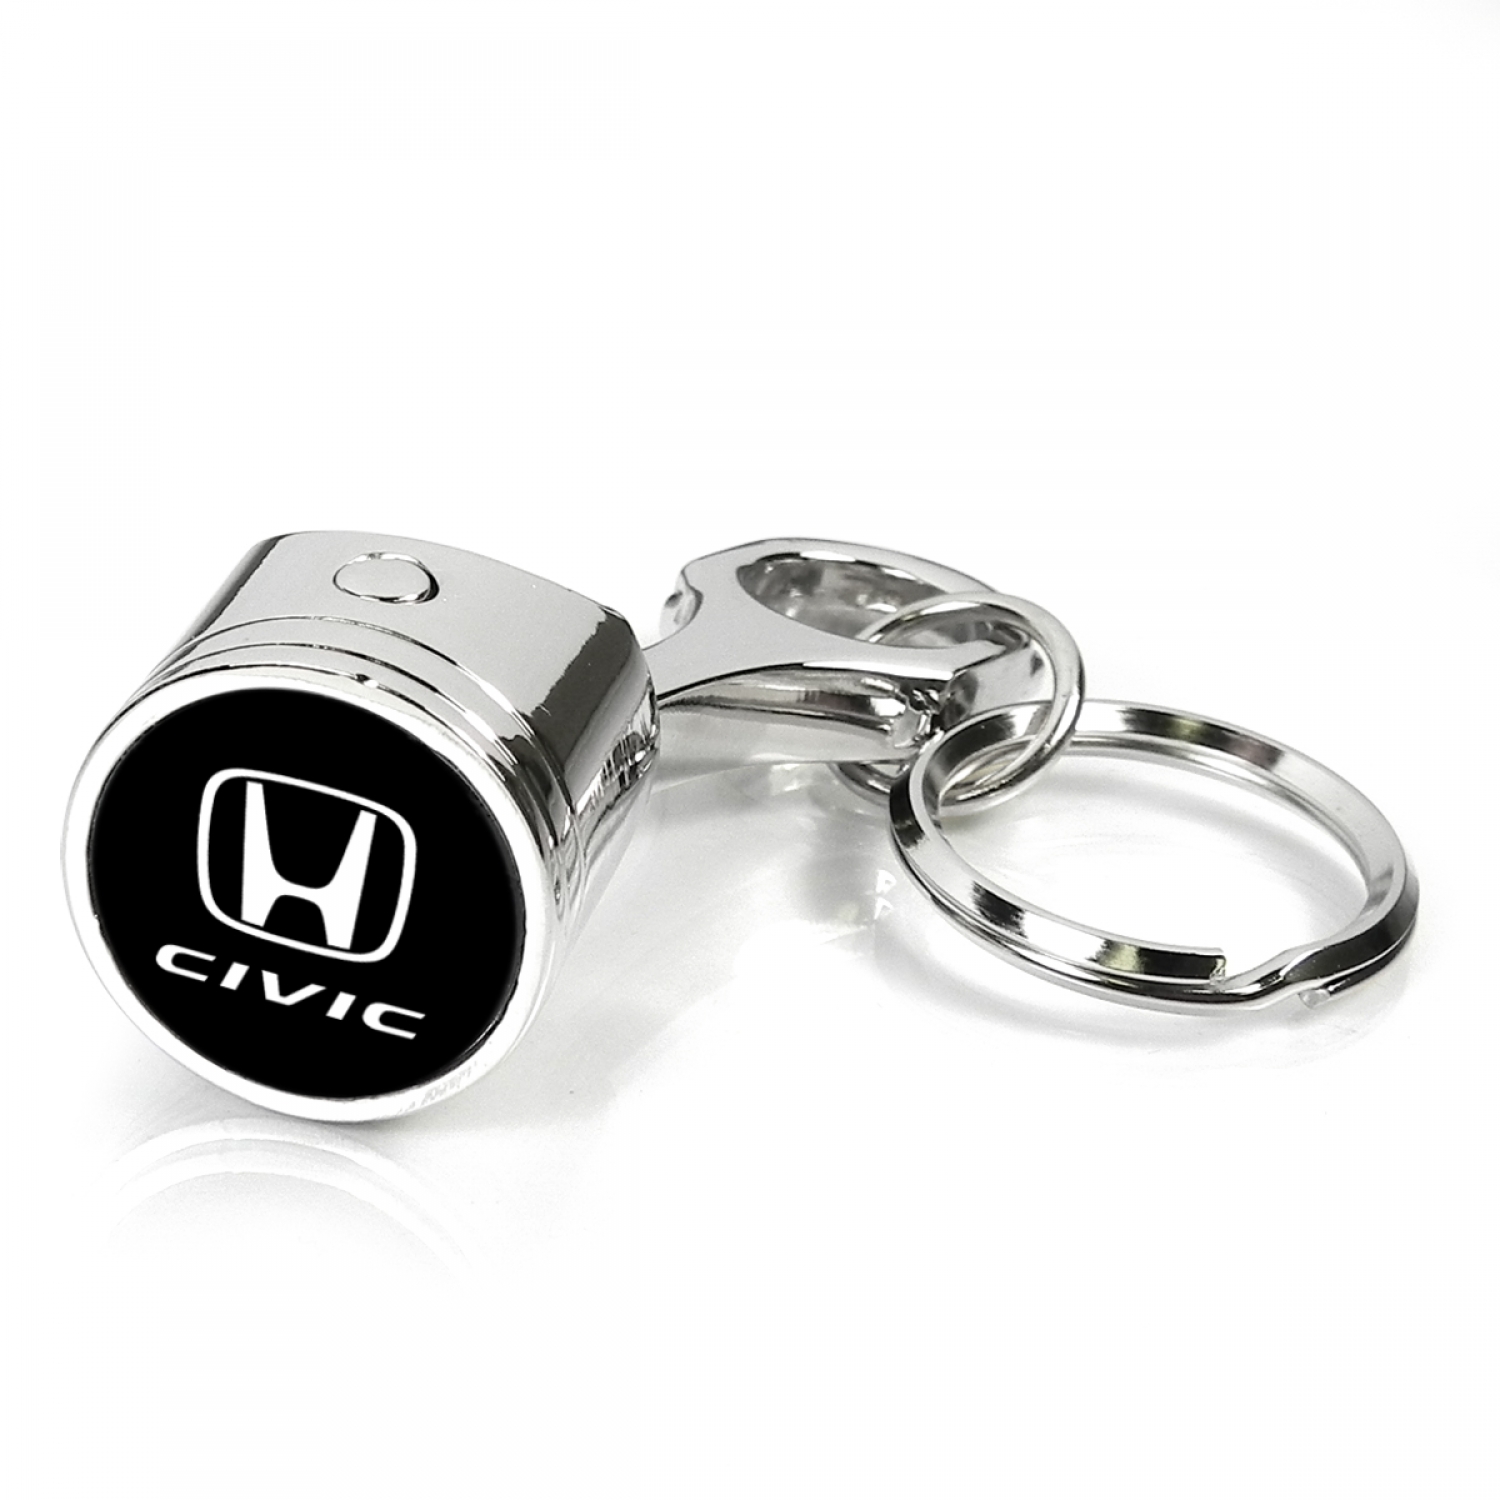 Honda Civic Piston Style Chrome Metal Key Chain